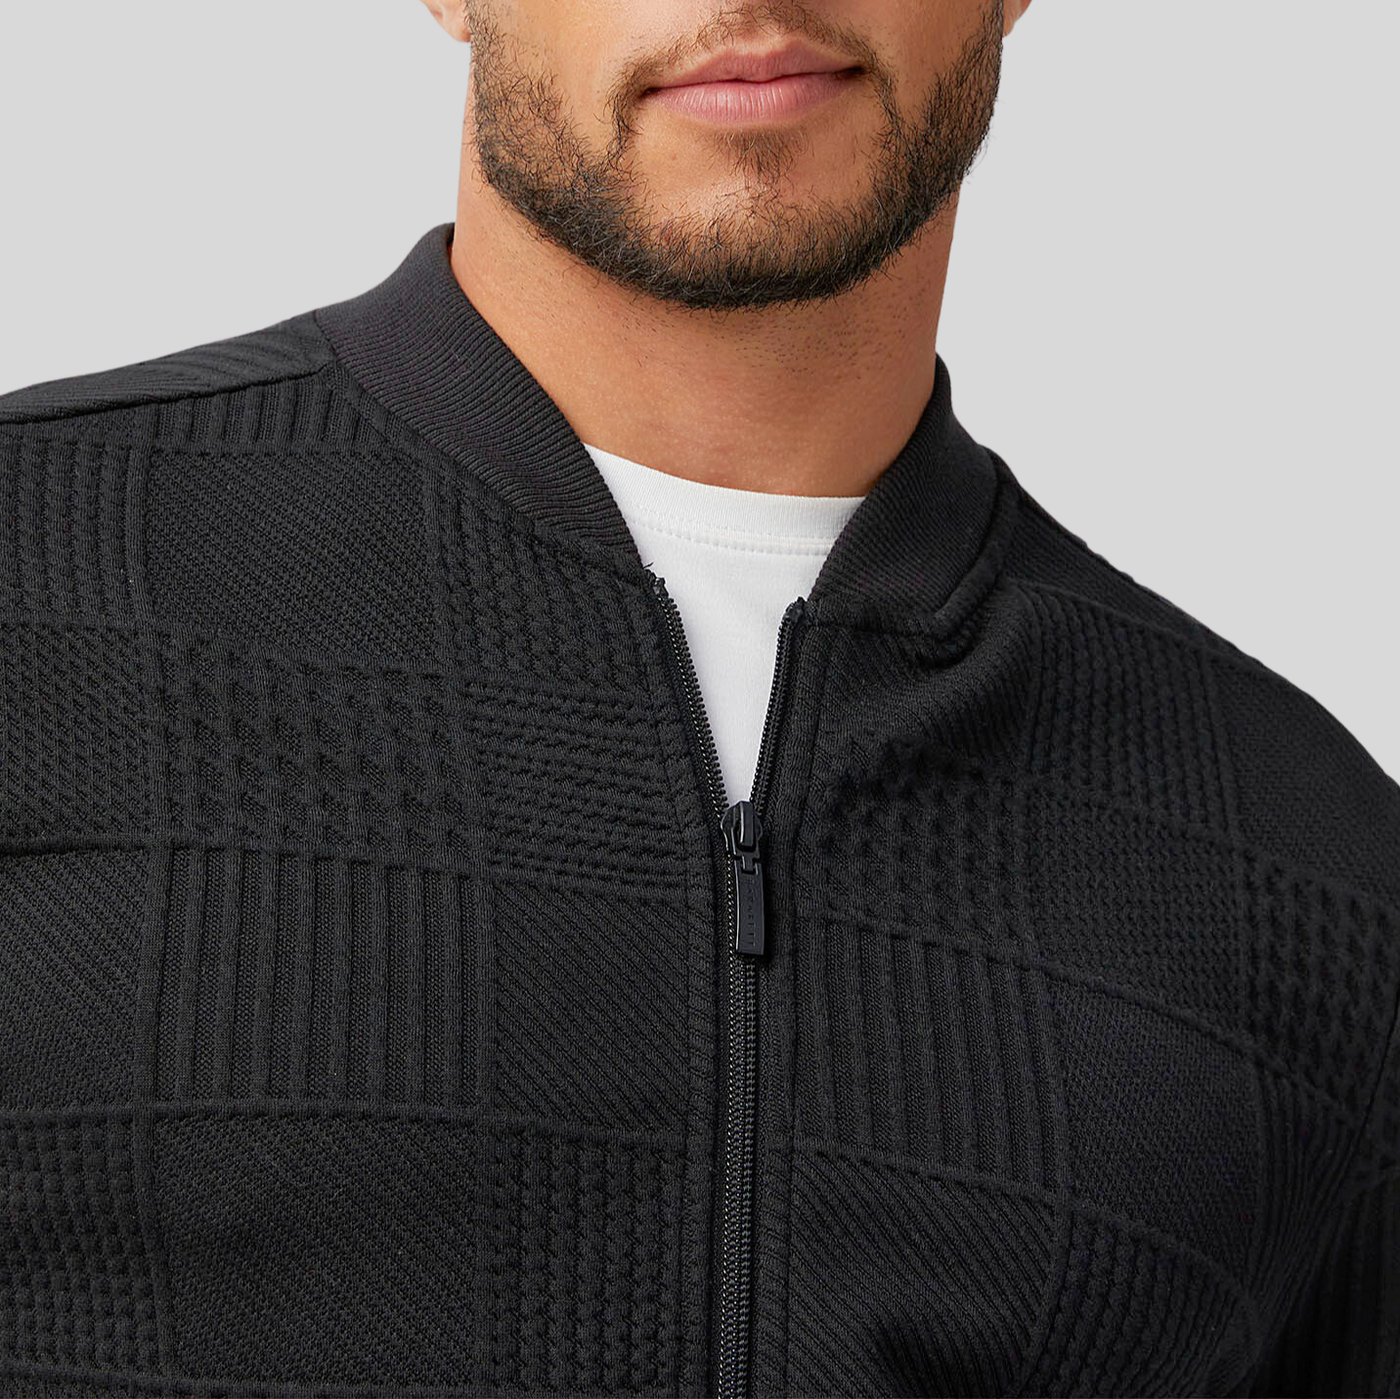 Gotstyle Fashion - Robert Barakett Sweaters Patchwork Jacquard Knit Zip Cardigan - Black